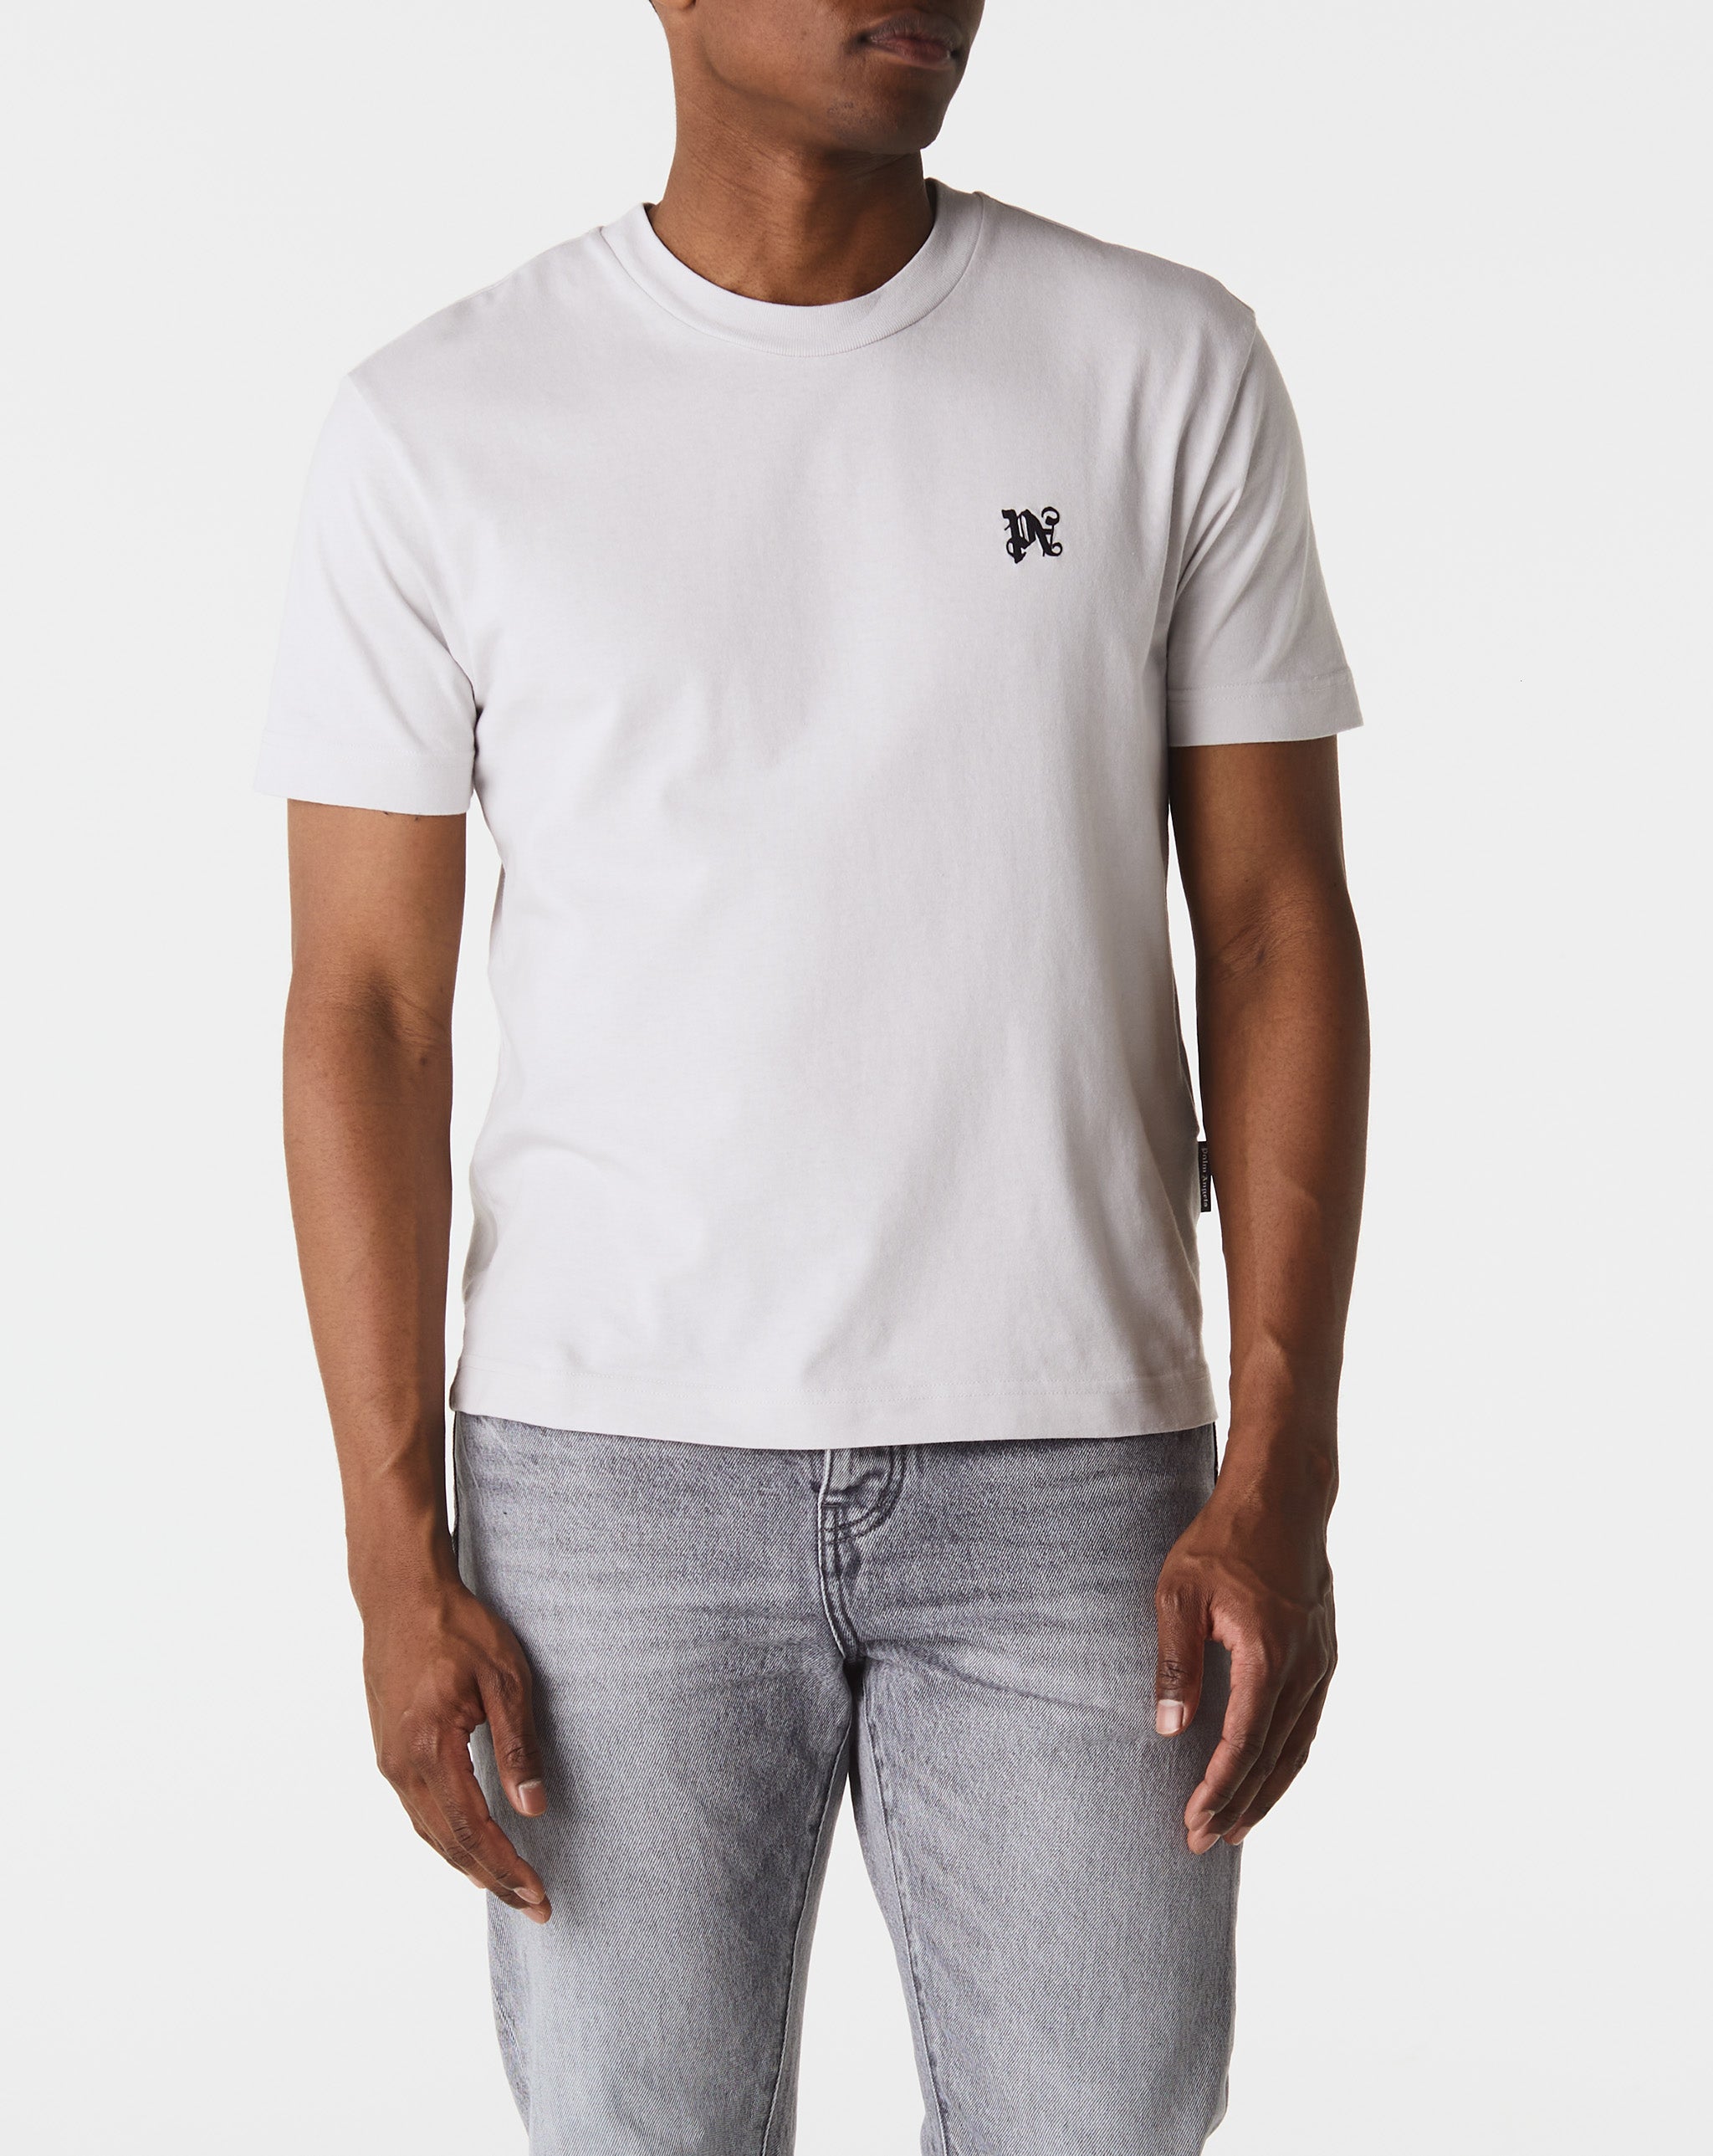 Palm Angels Monogram T-Shirt Tri-Pack  - Cheap Urlfreeze Jordan outlet